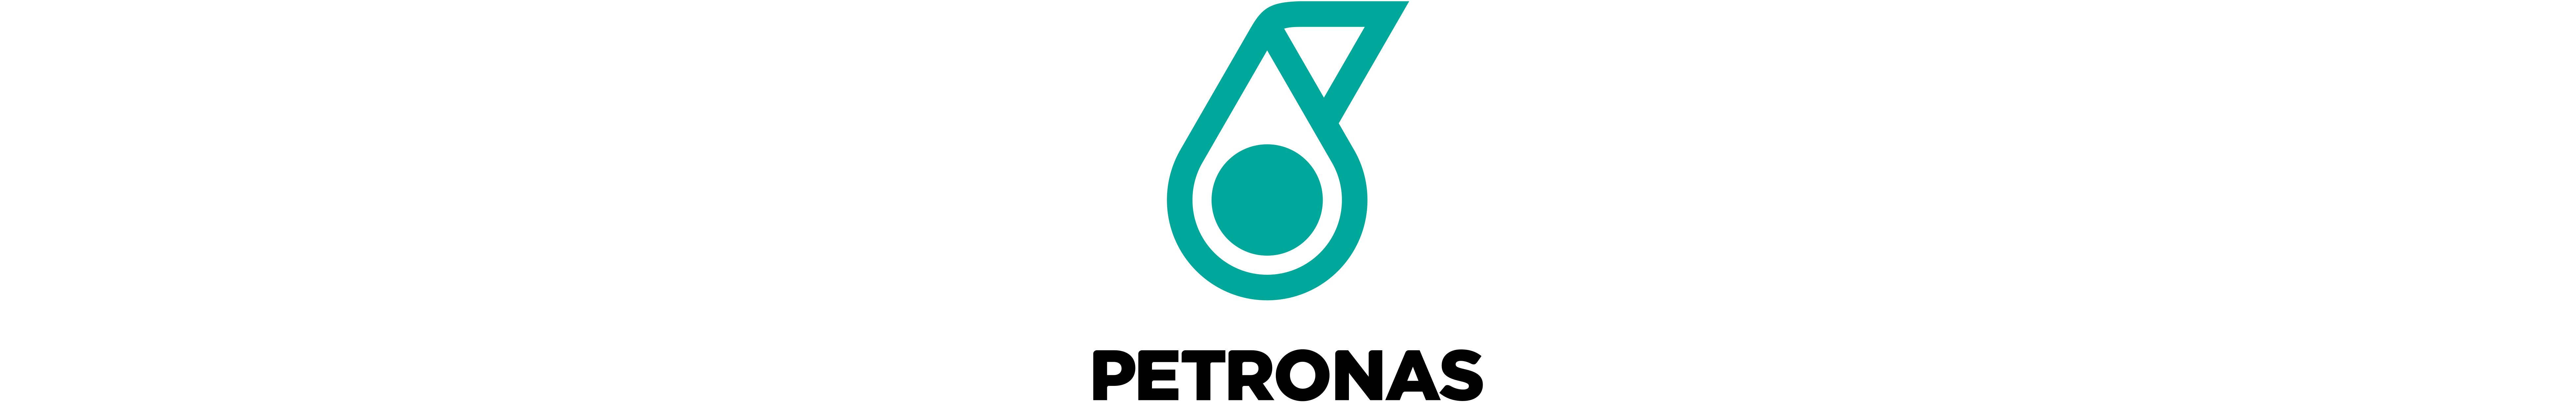 Petronas_afc-min